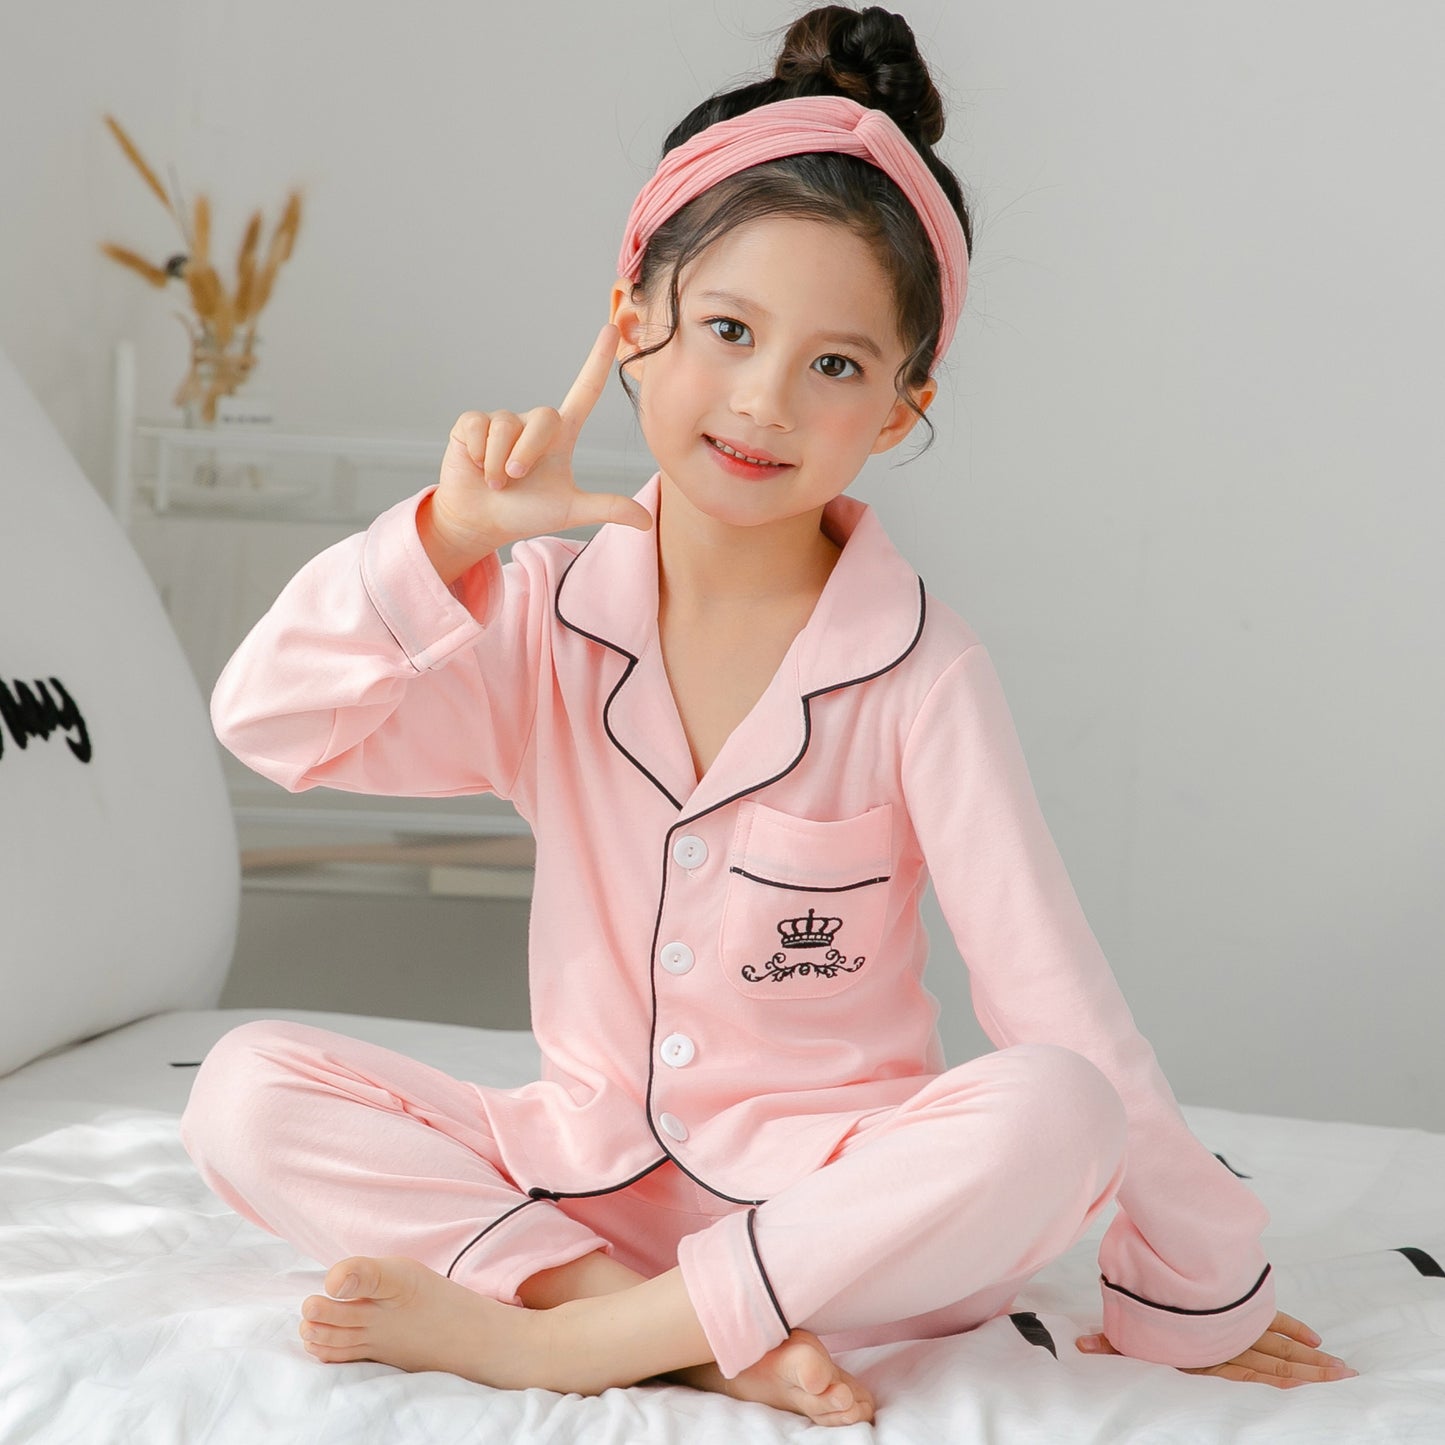 Cotton pajamas for children